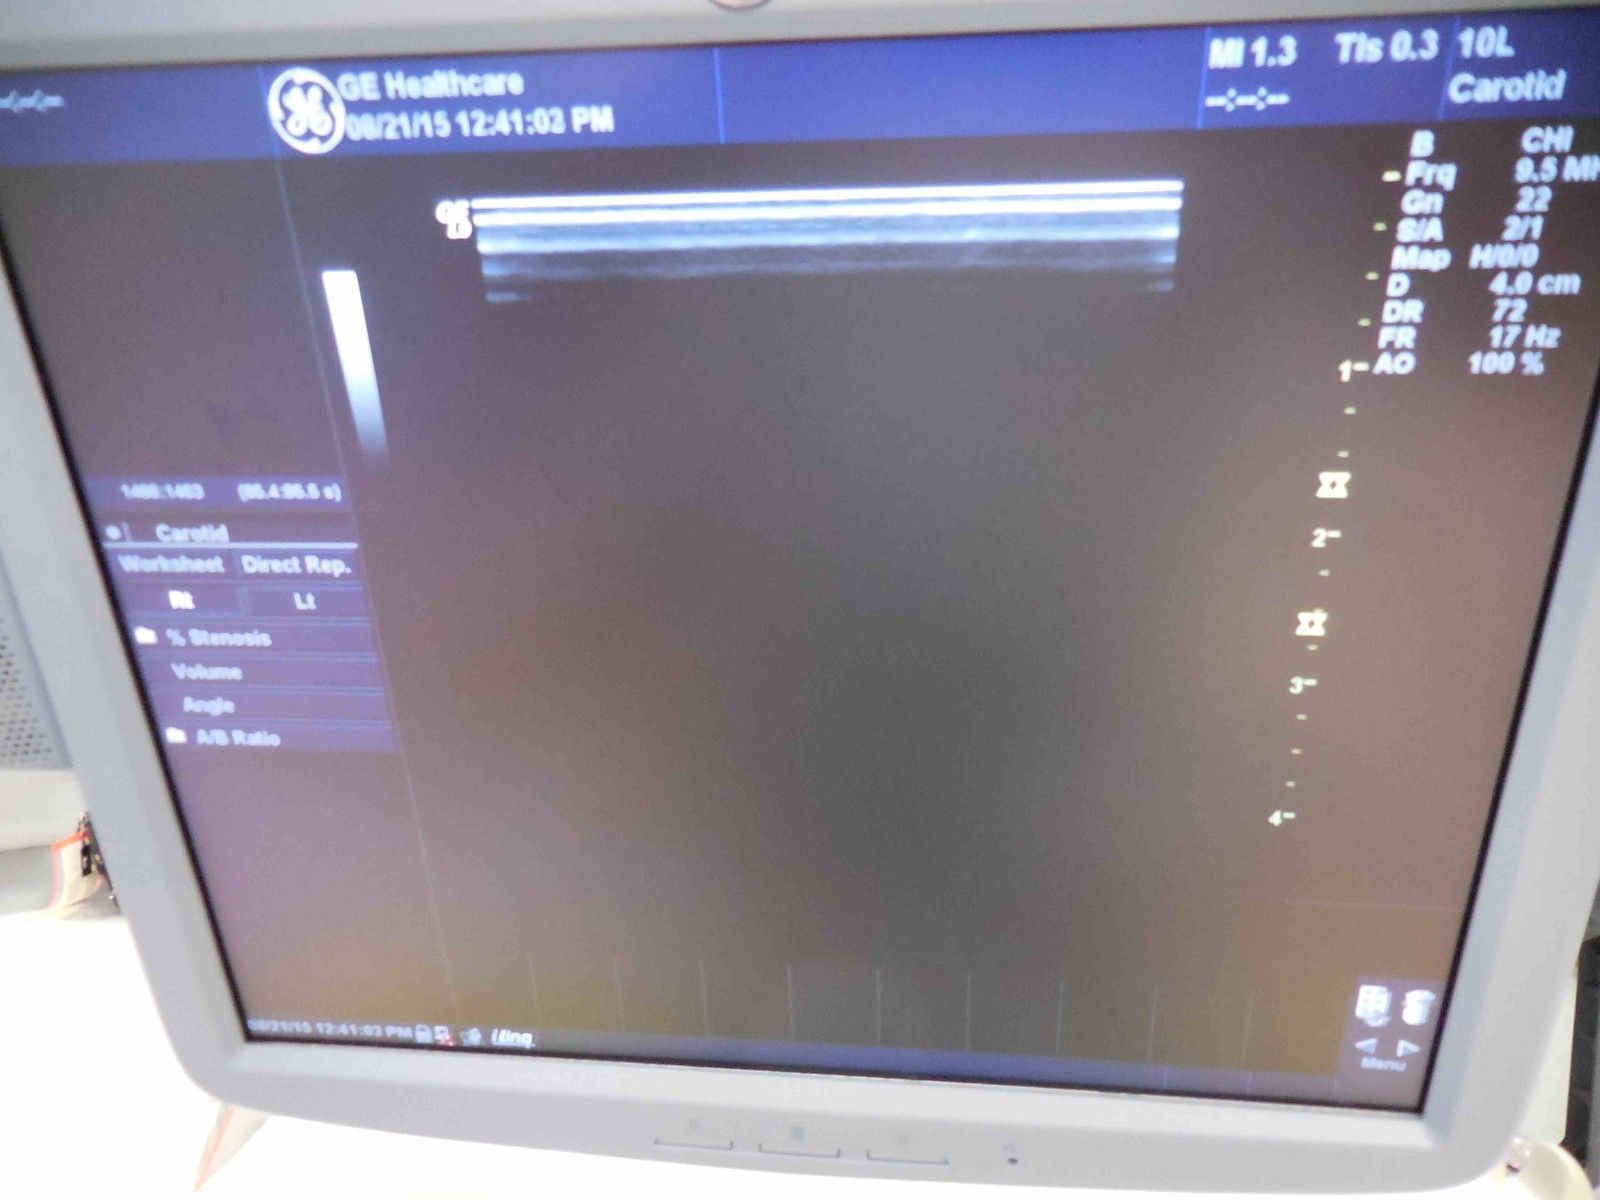 GE Logiq 9 LCD Ultrasound System